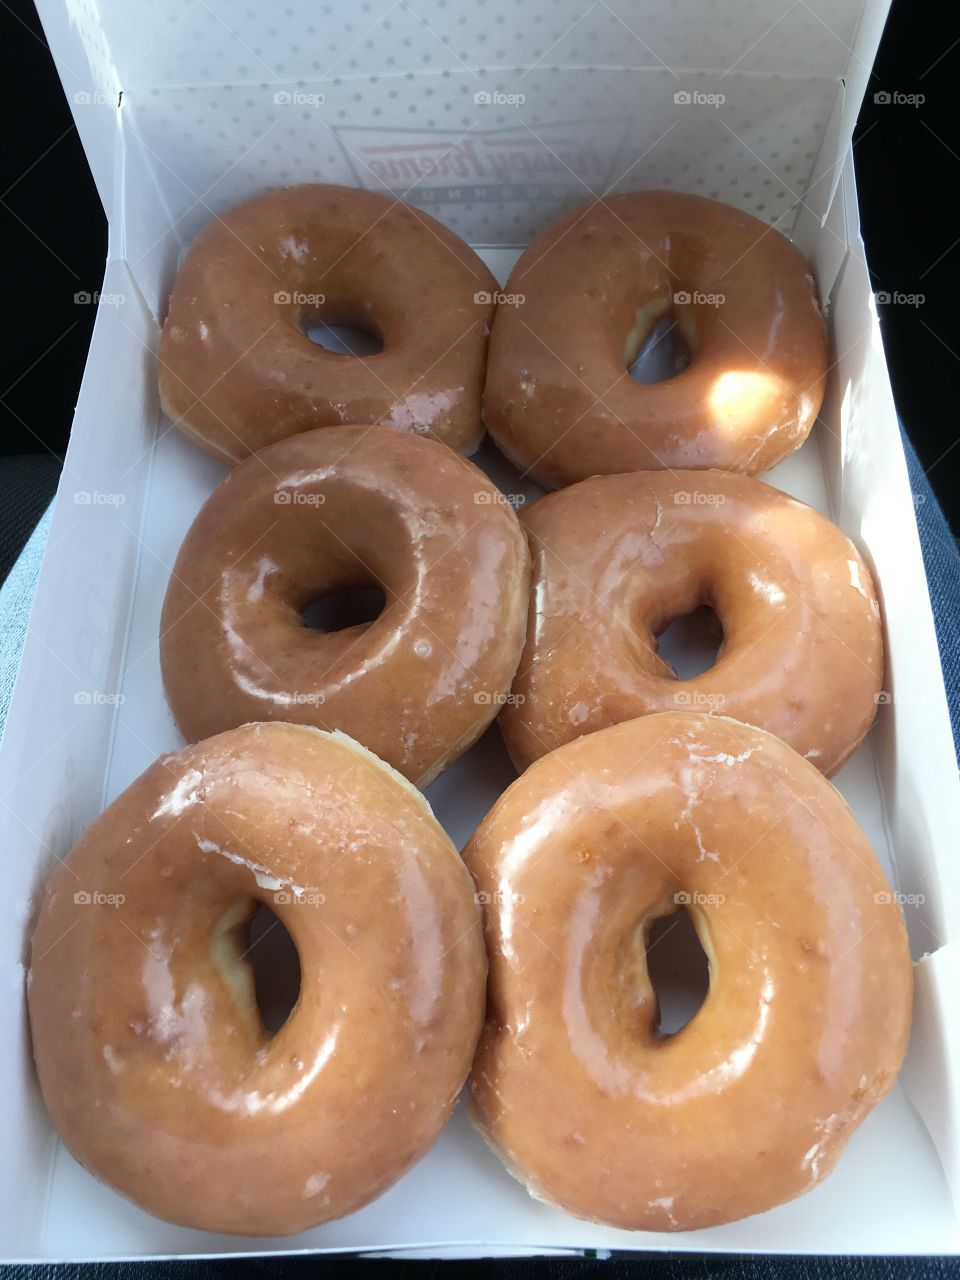 Delicious glazed Krispy Kreme doughnuts